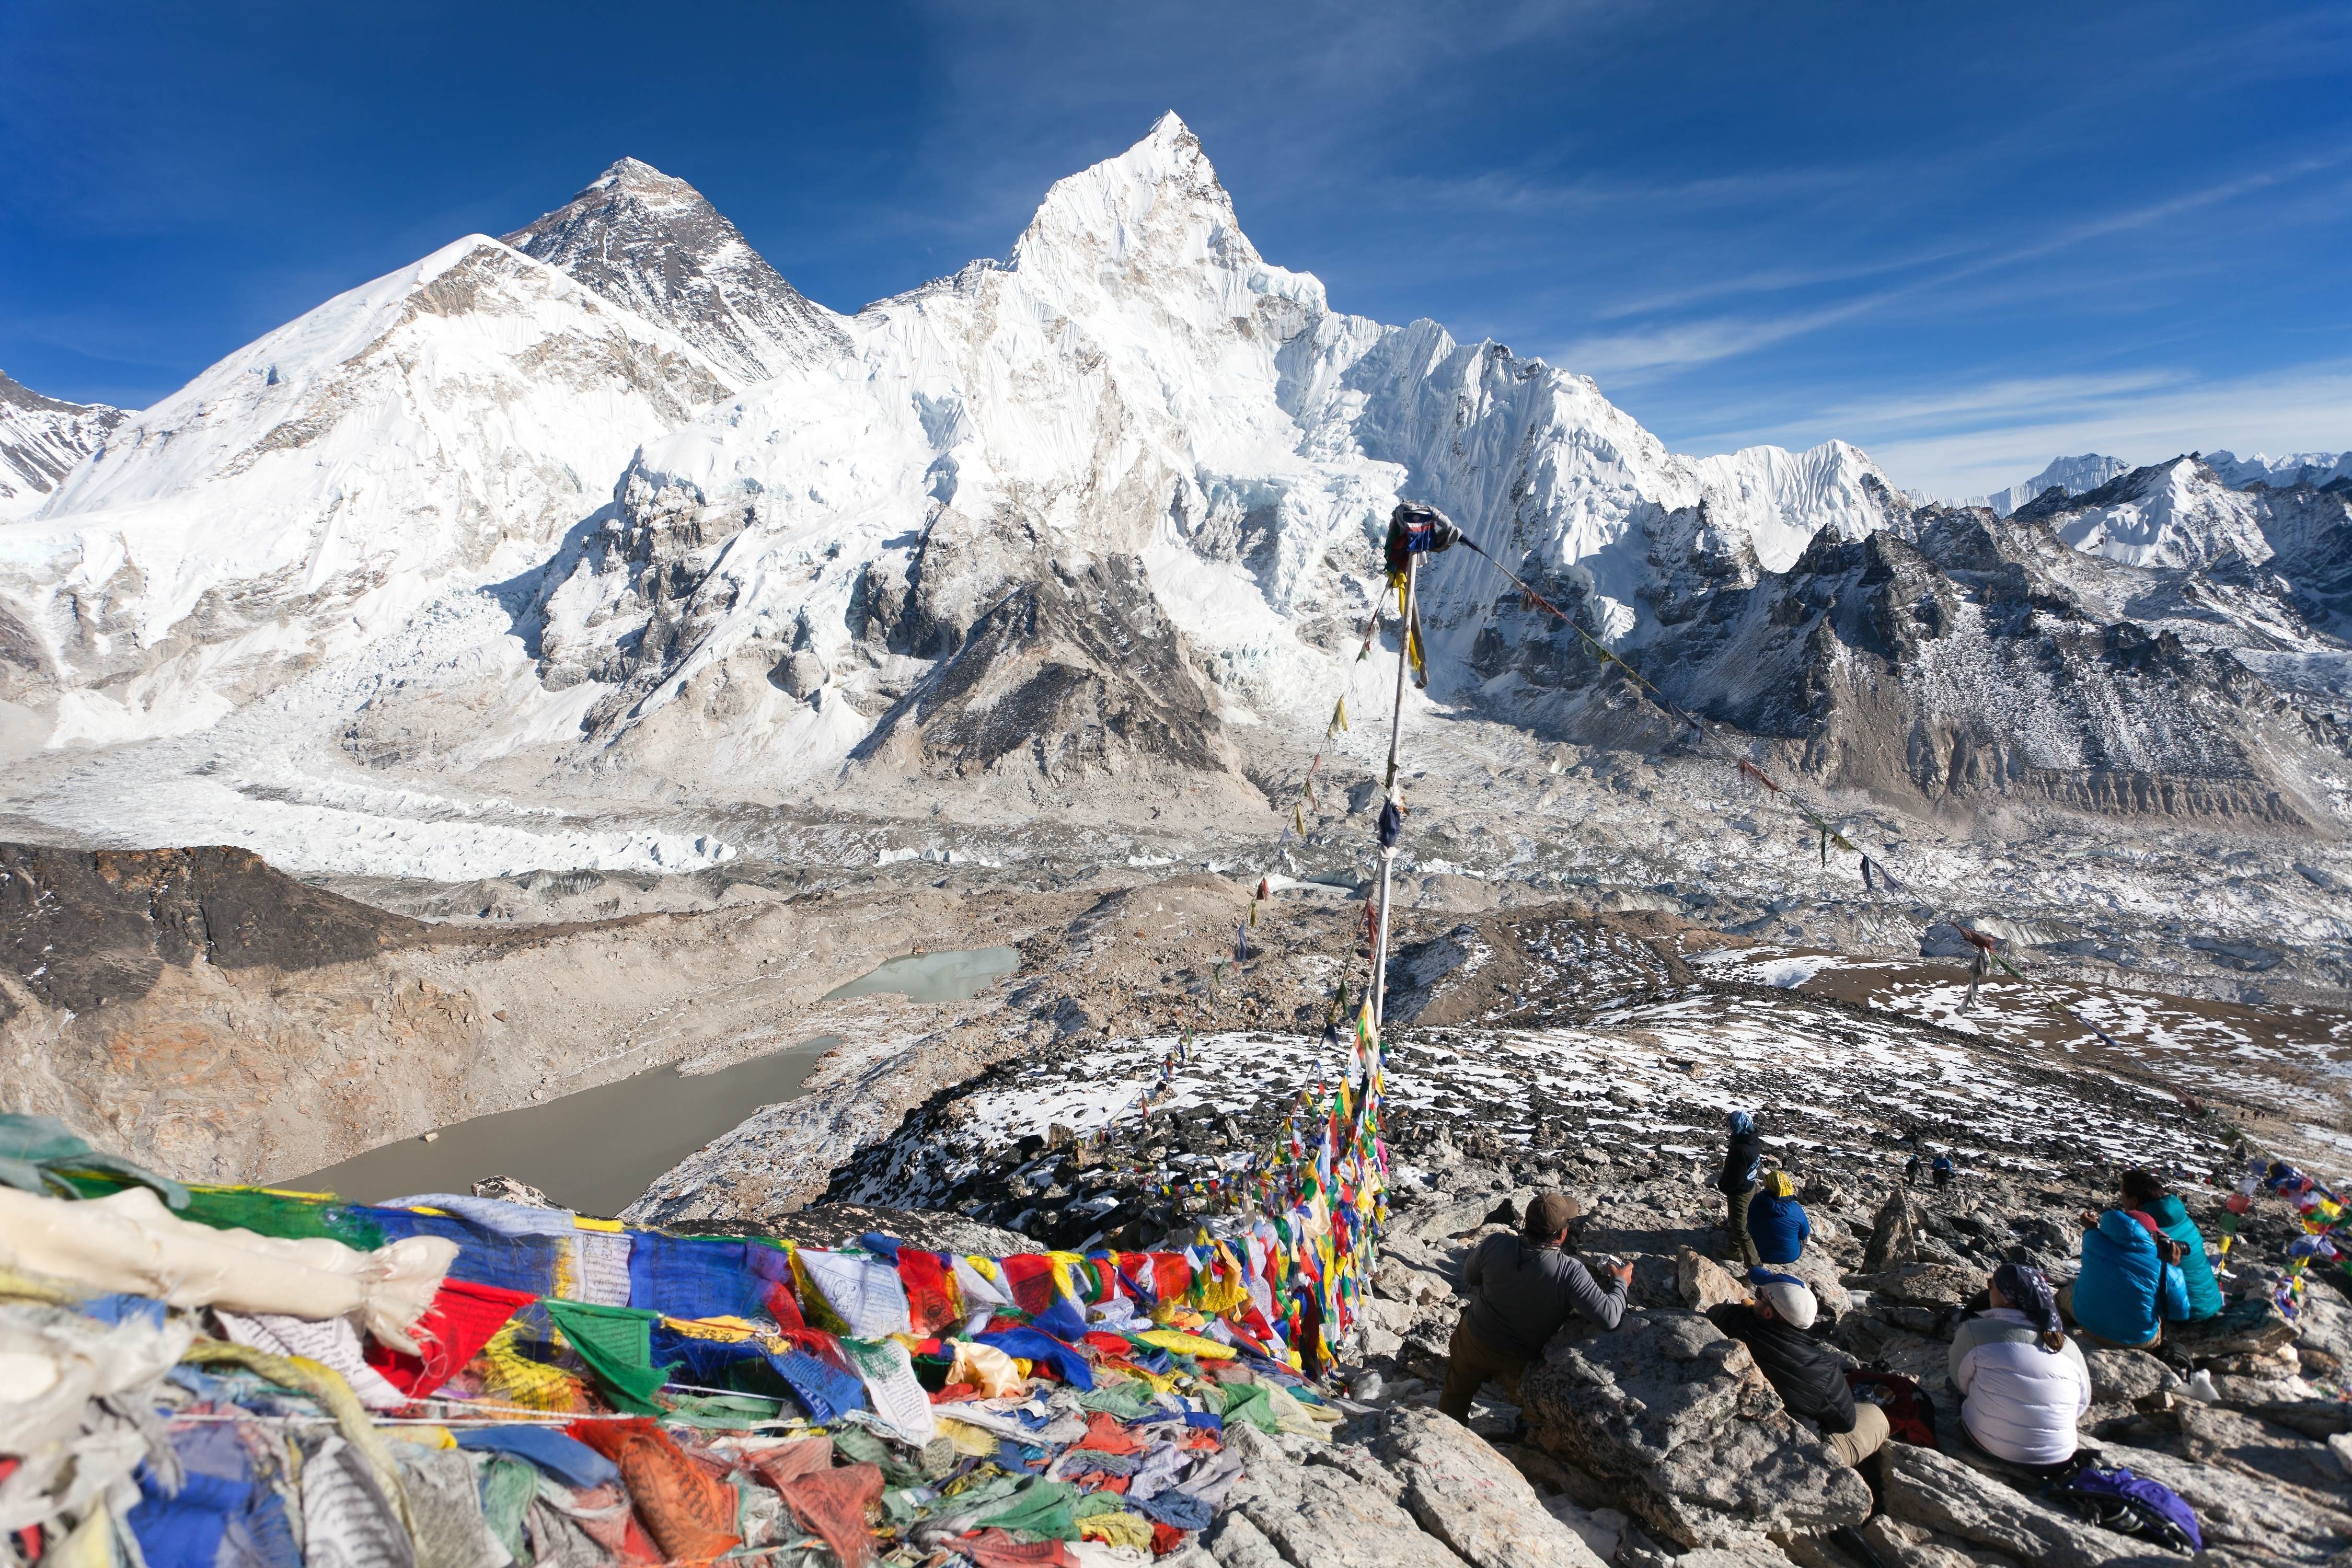 A view of Mt Everest, Lhotse and Nuptse in Sagarmatha National Park, Nepal © Daniel Prudek / Shutterstock